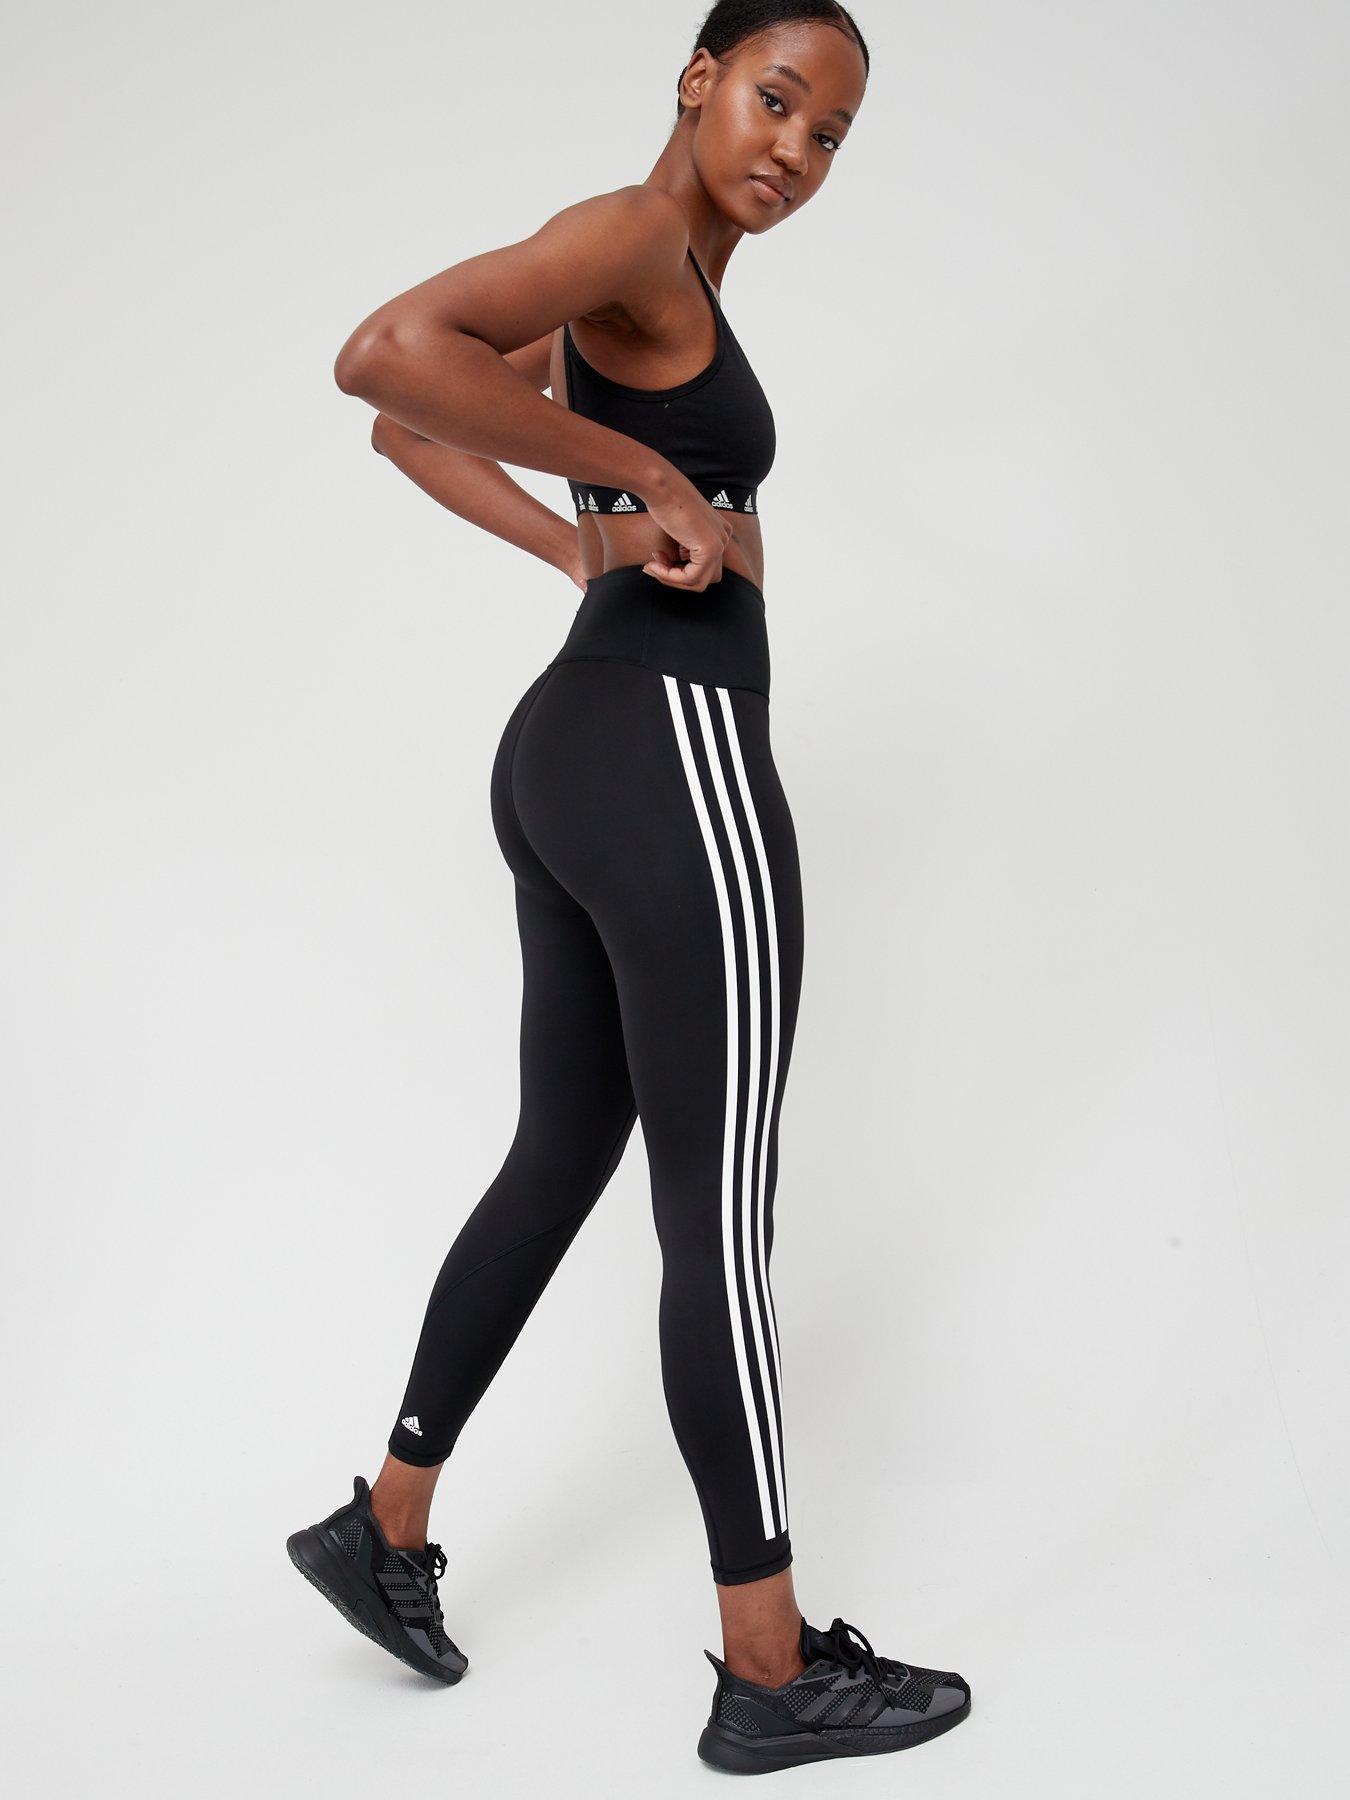 adidas Optime Full-Length Leggings - Black | Women's Training | adidas US